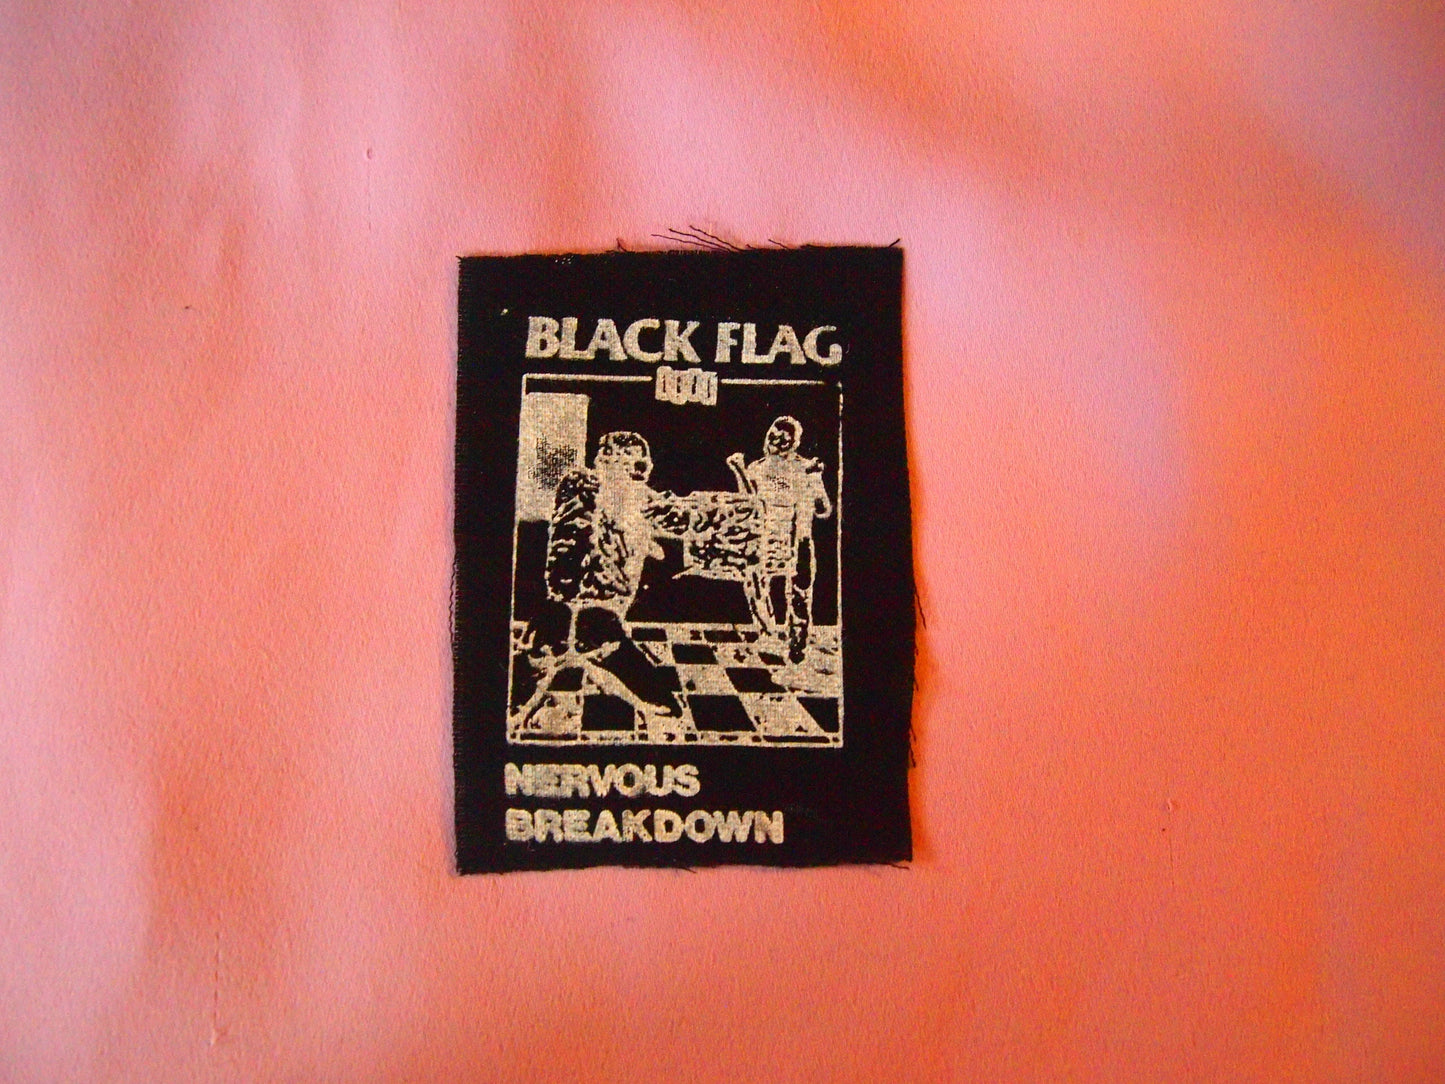 Black Flag Bars Nervous Breakdown Patch